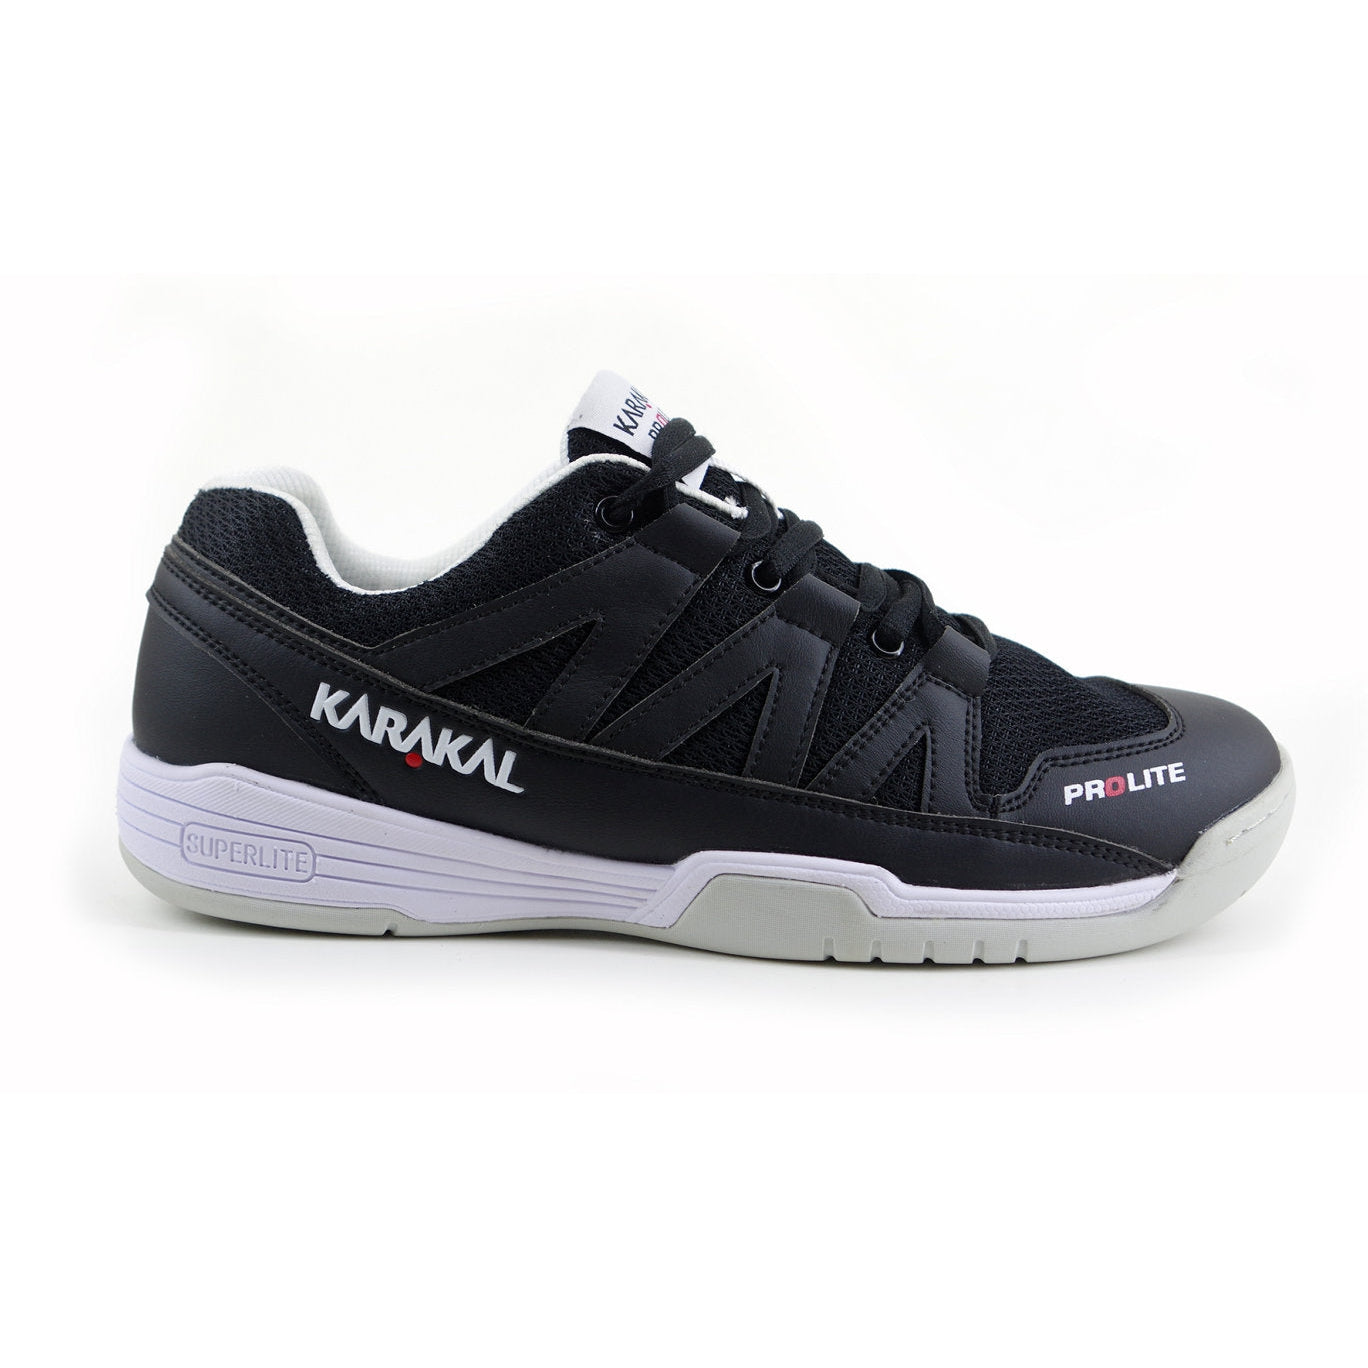 Karakal (Kf950) Prolite Court Shoe - Size 41